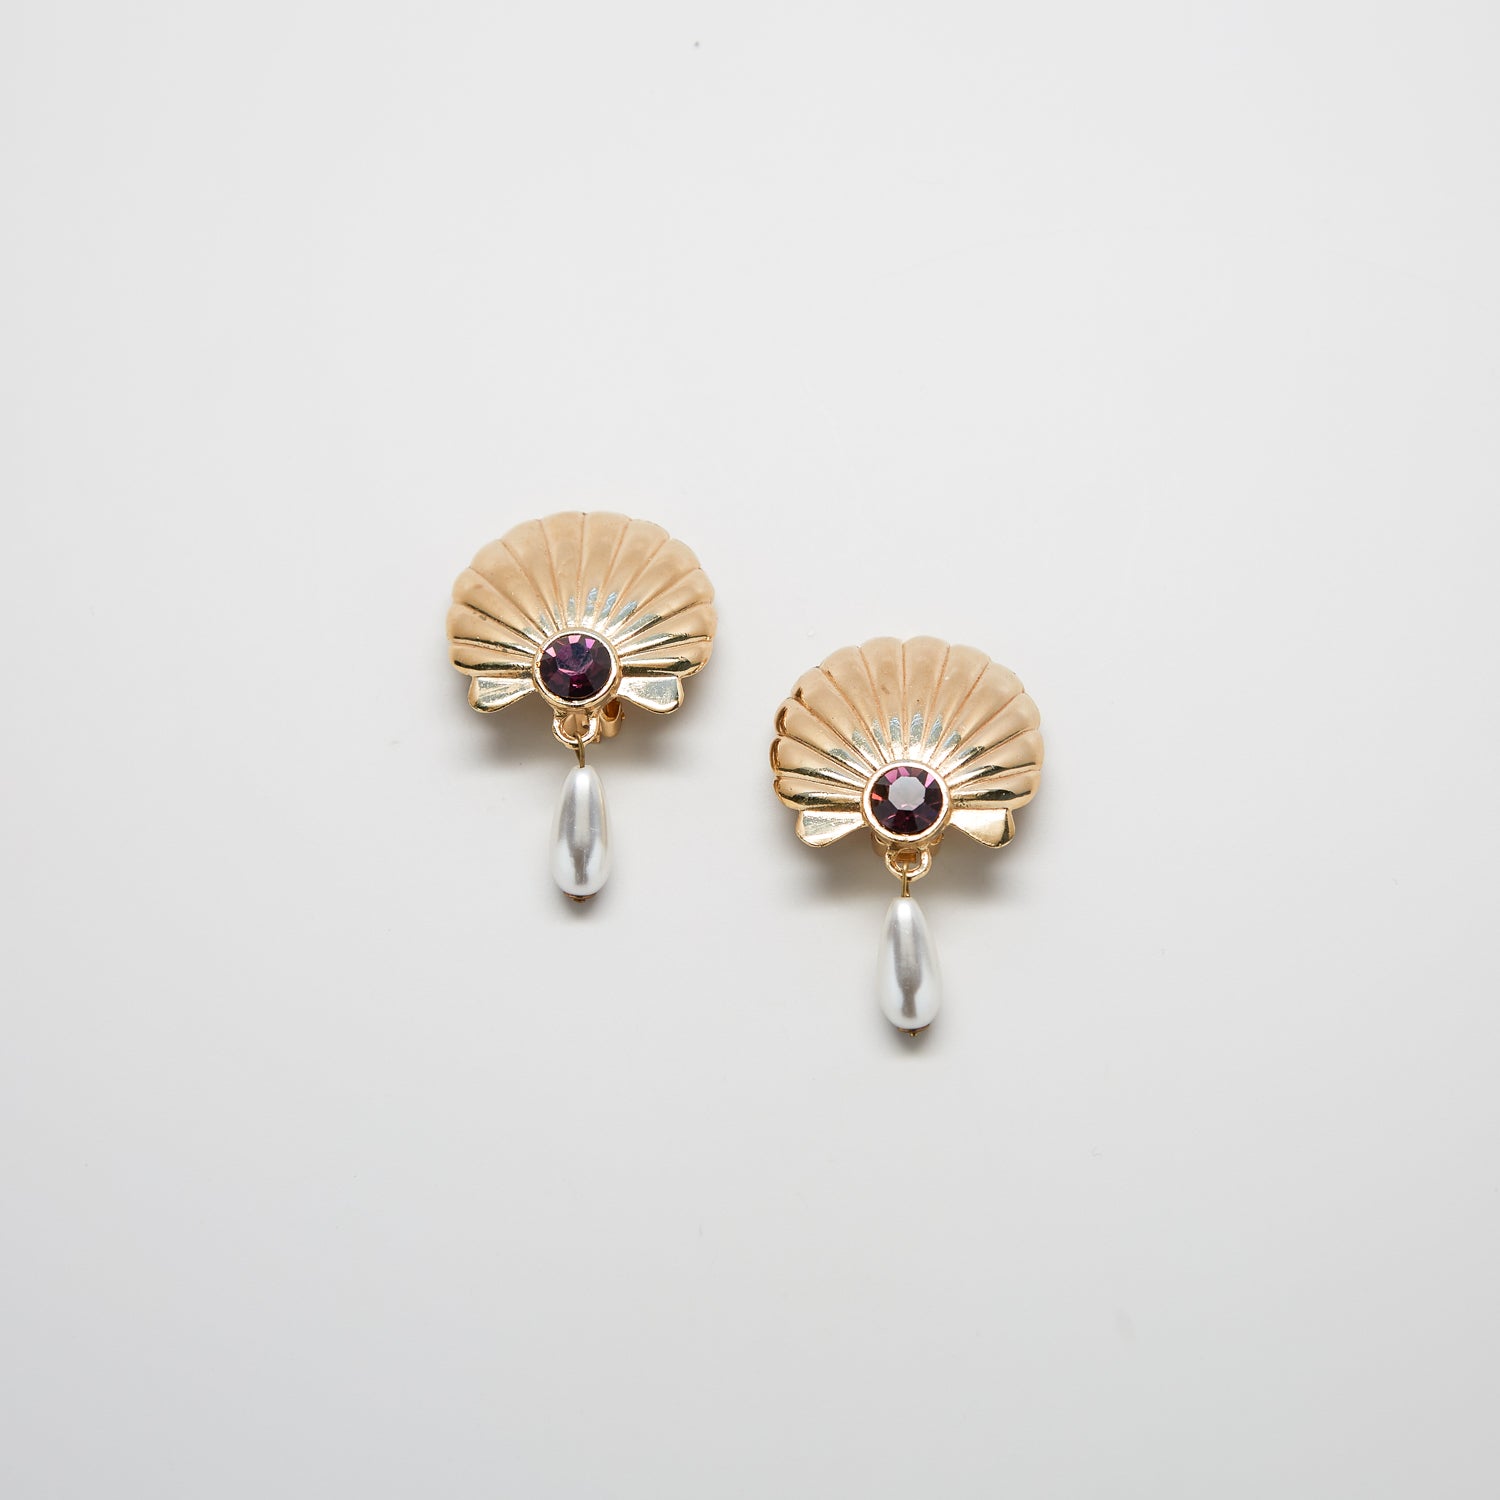 Vintage Deco Style Shell Earrings